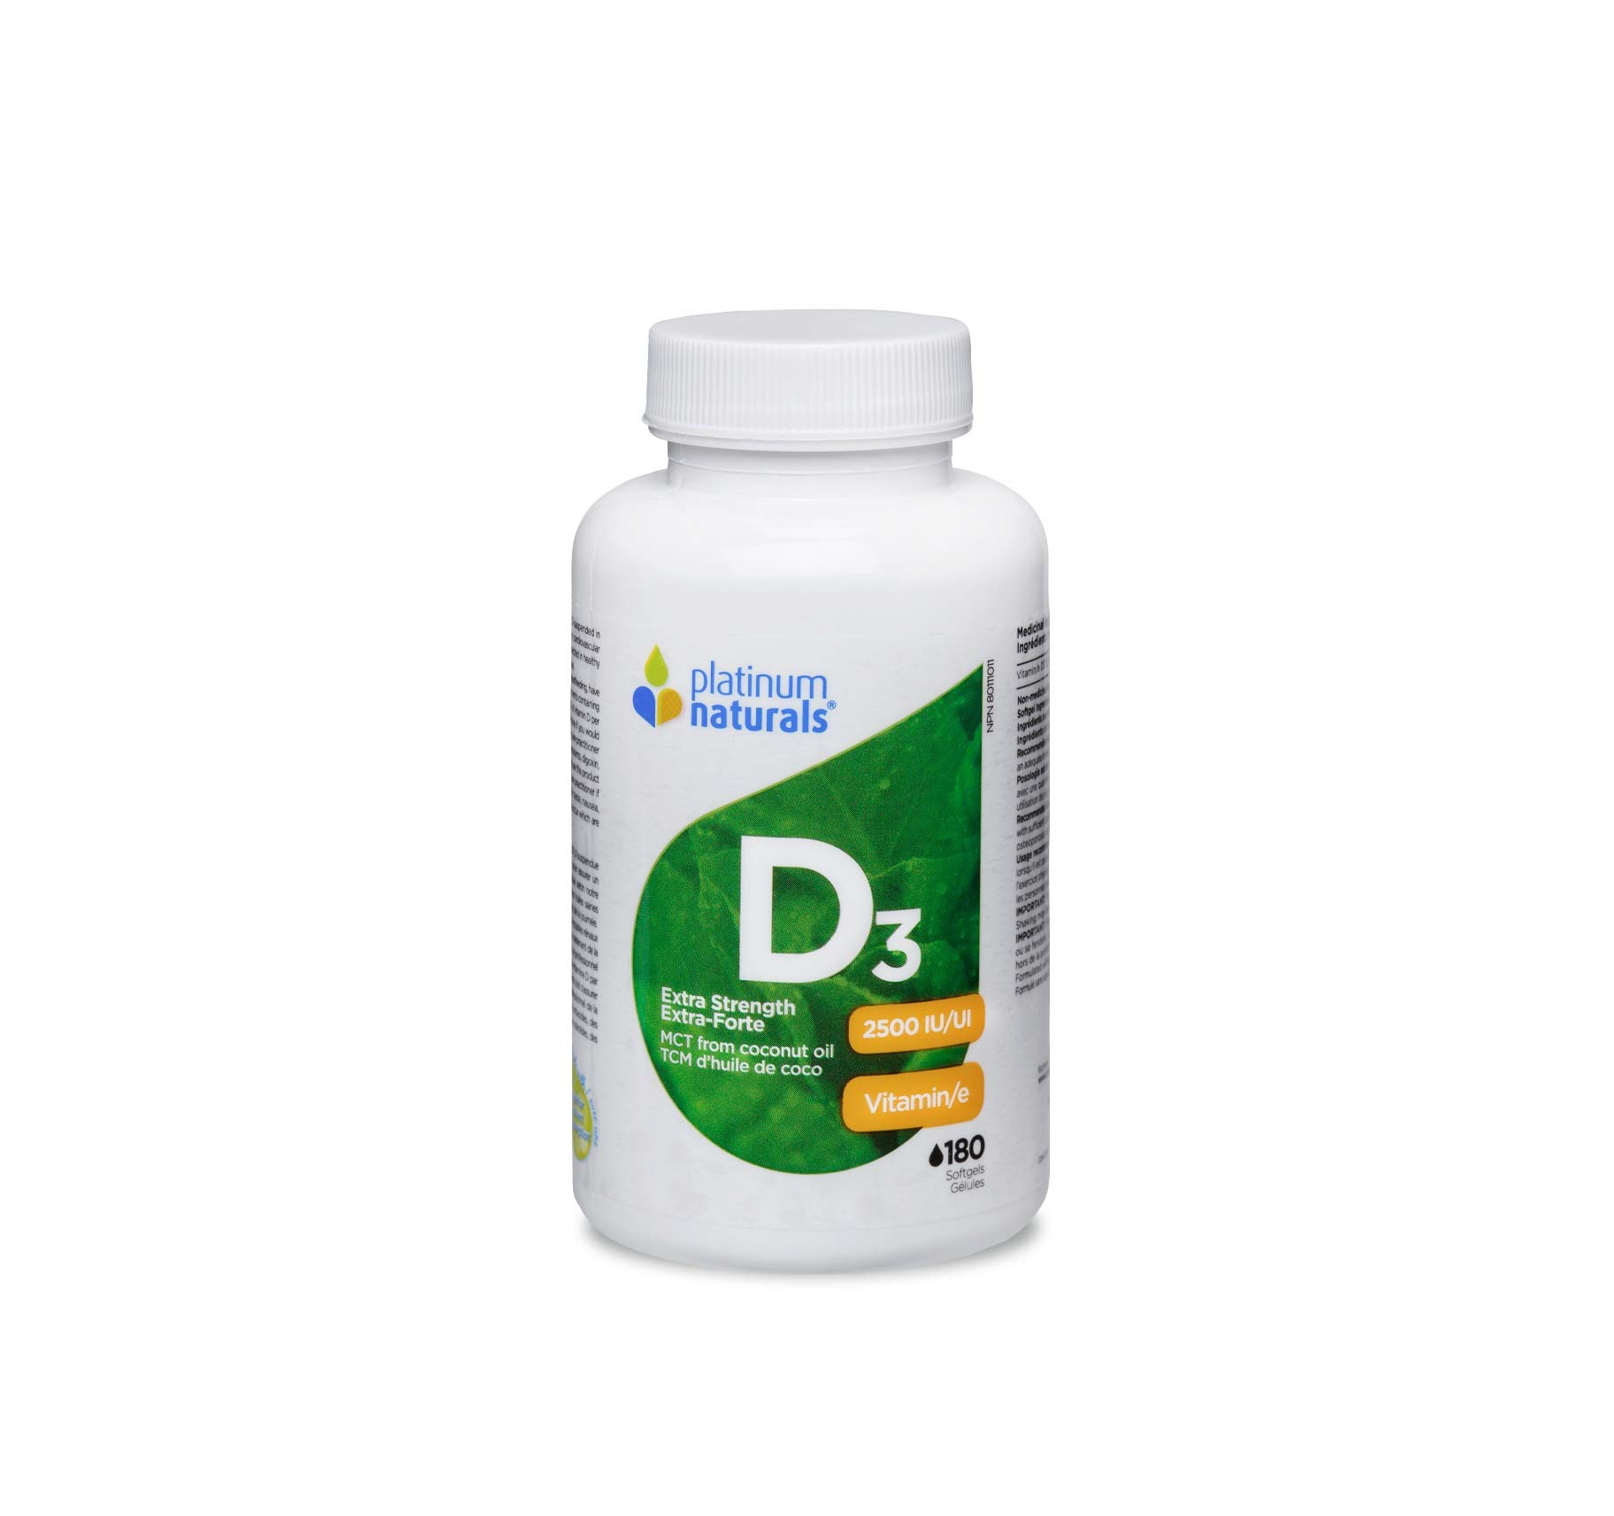 Platinum Naturals Vitamin D3 Extra Strength 2500IU